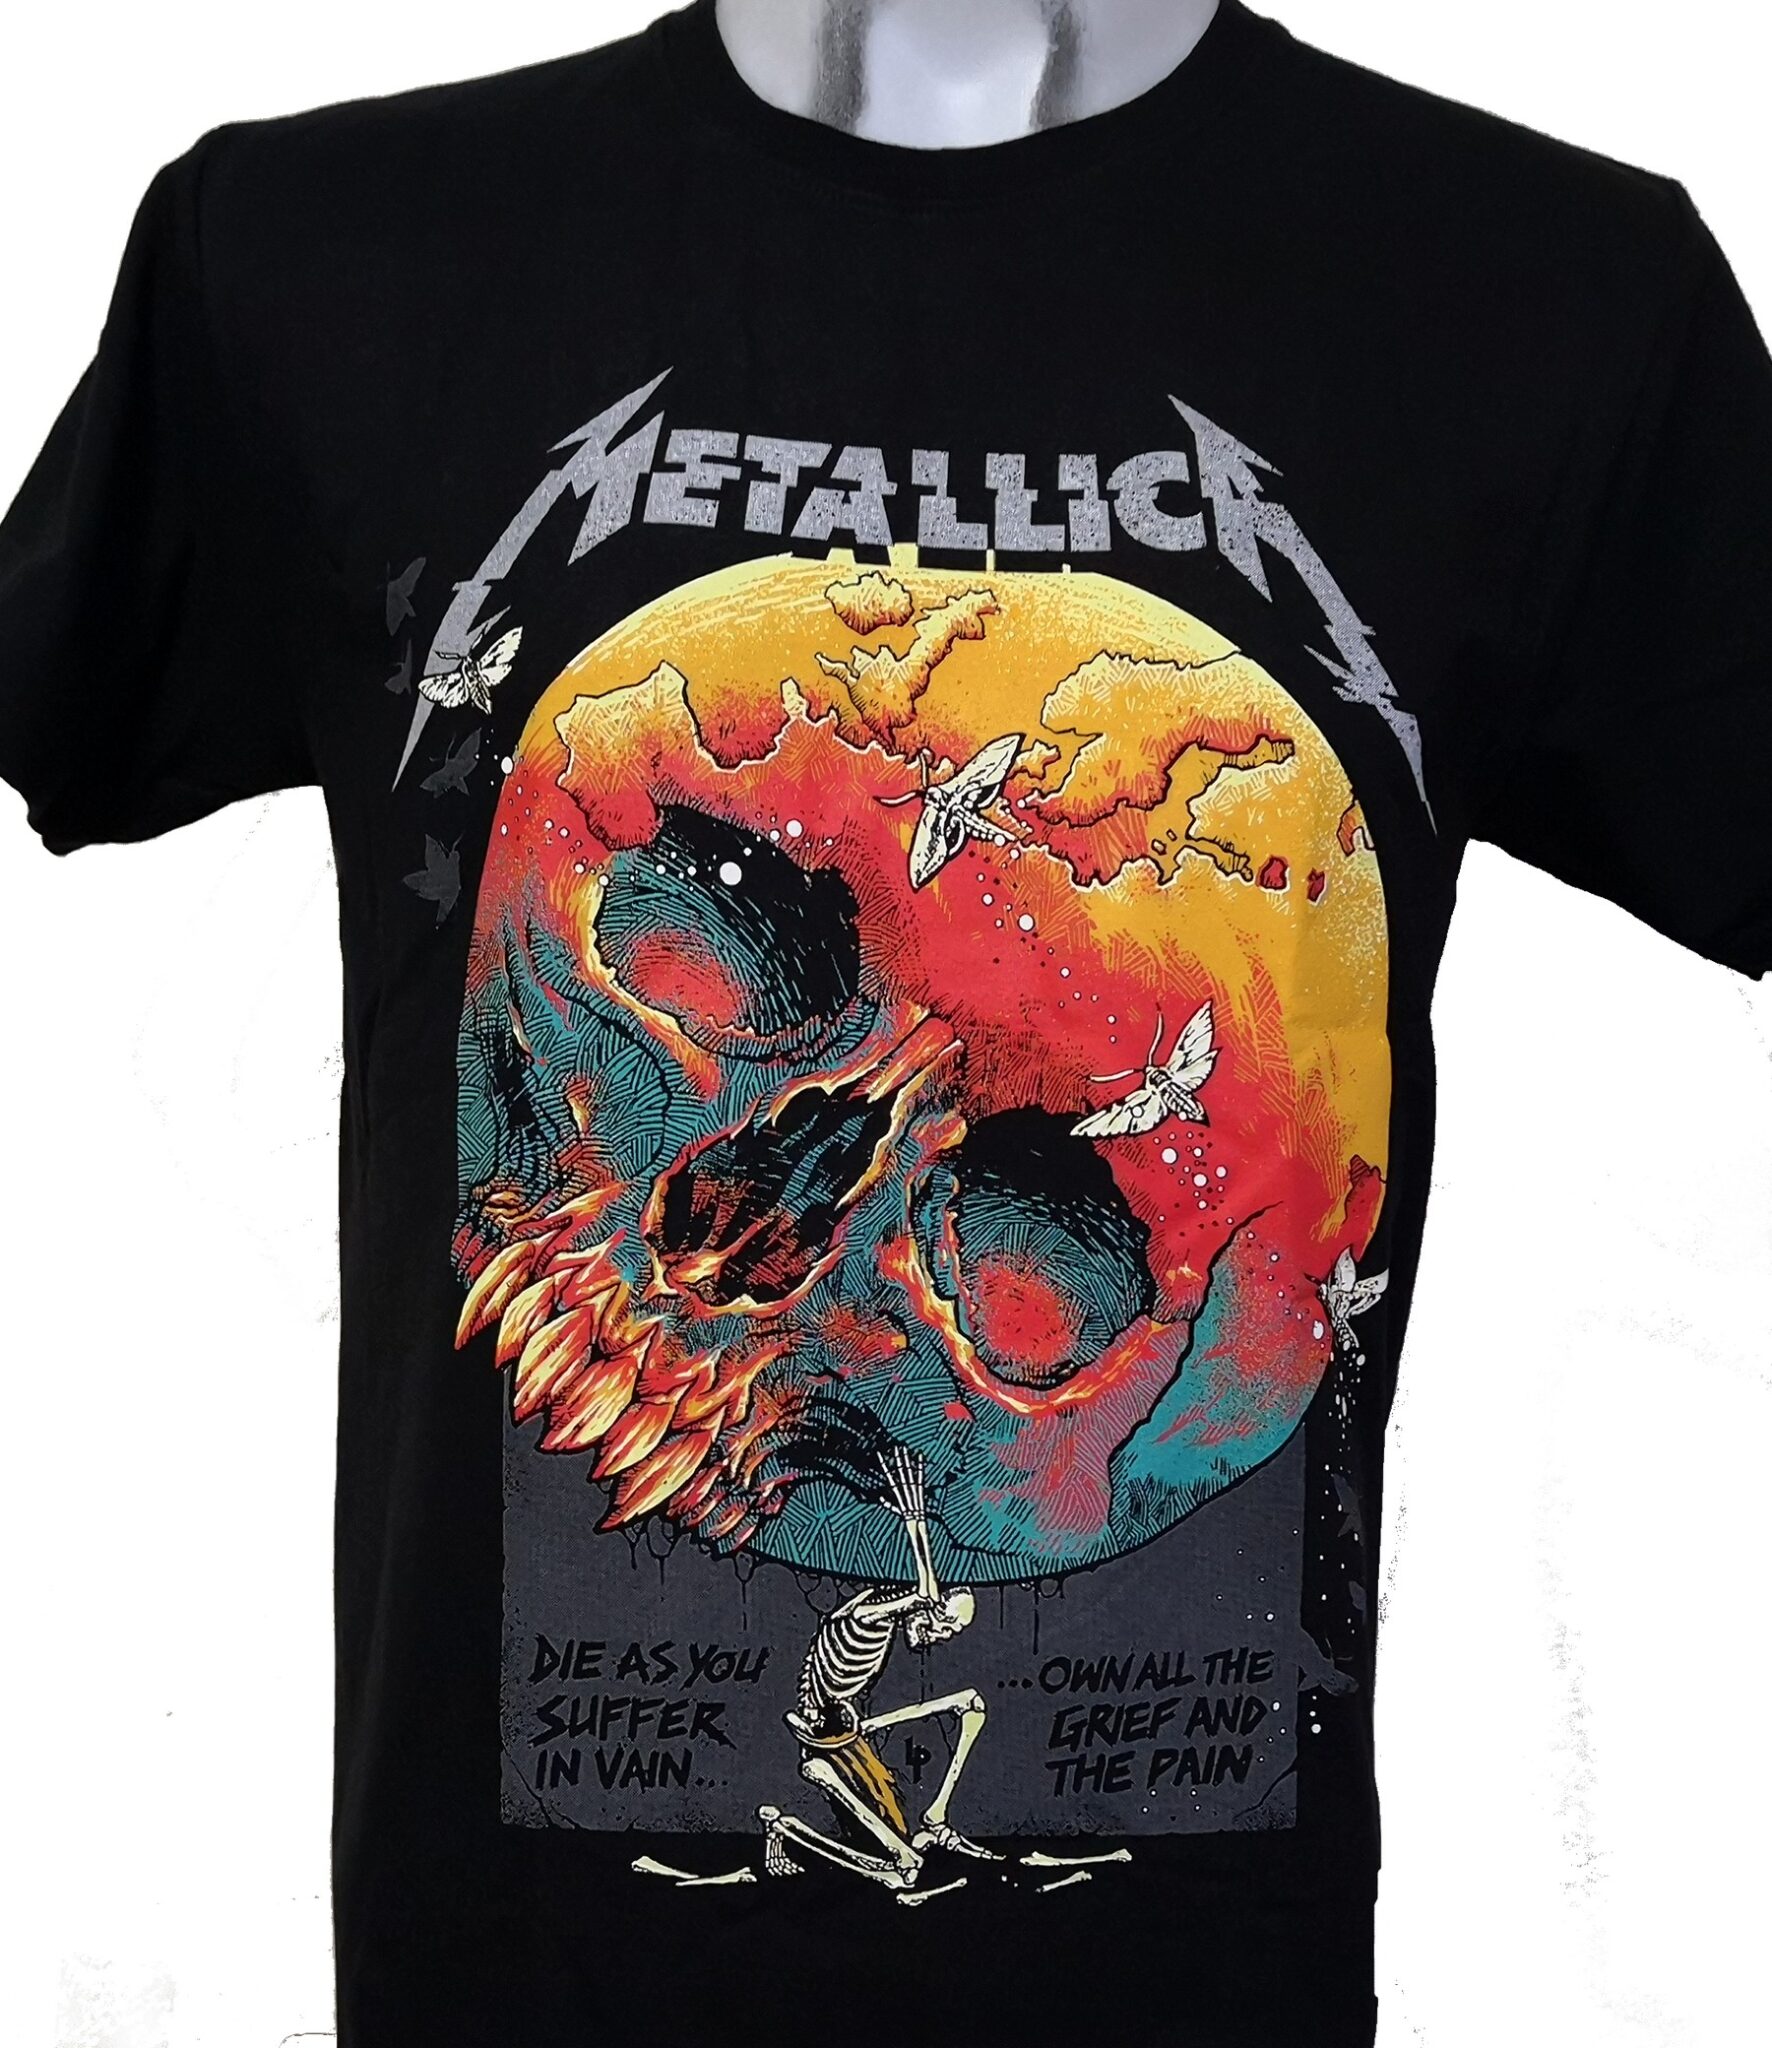 Metallica tshirt size XXL RoxxBKK